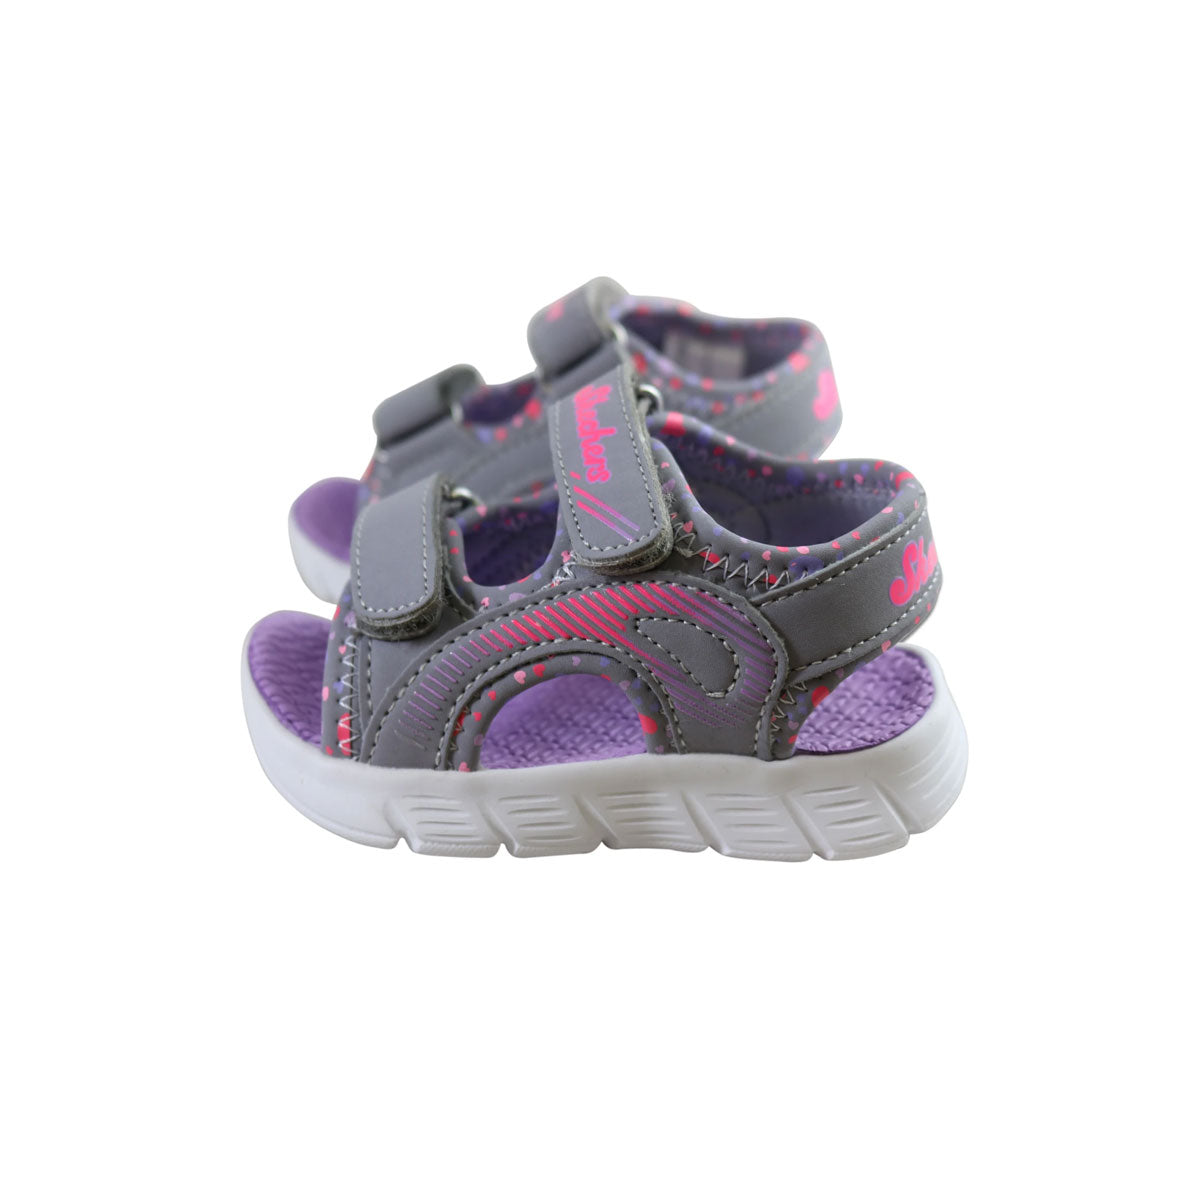 Skechers Infant Girls' C-Flex Sandals